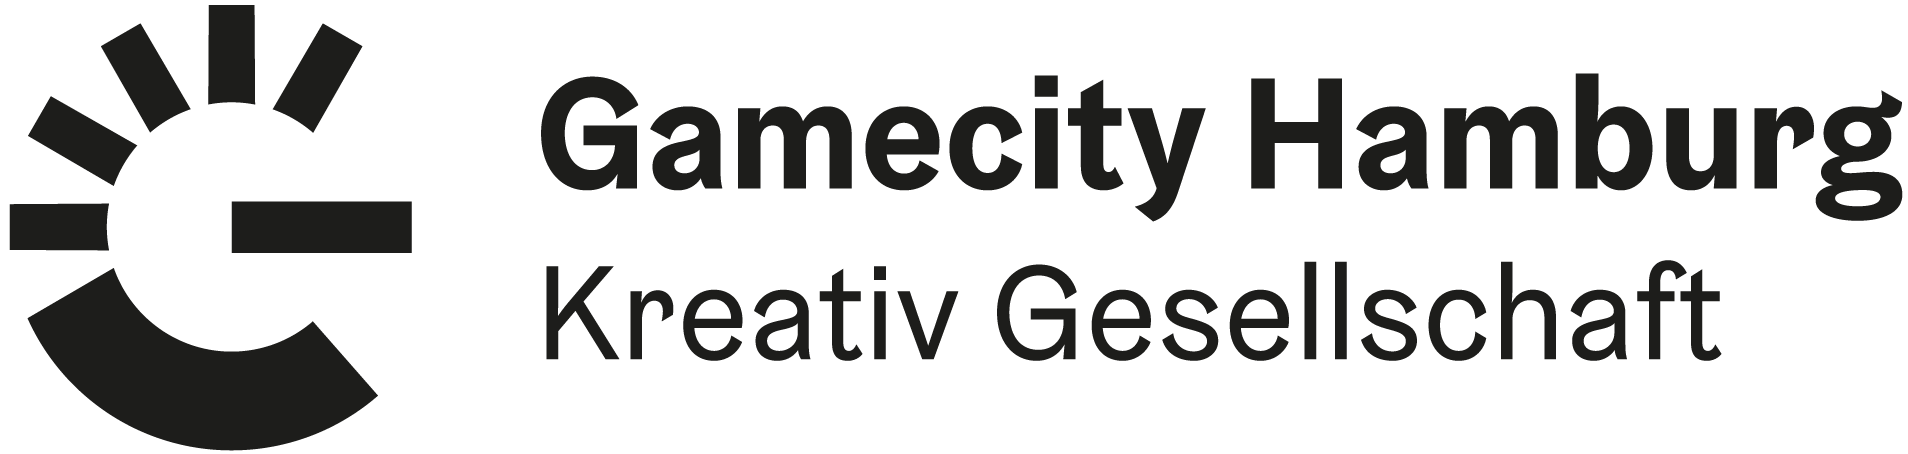 GameCity Logo